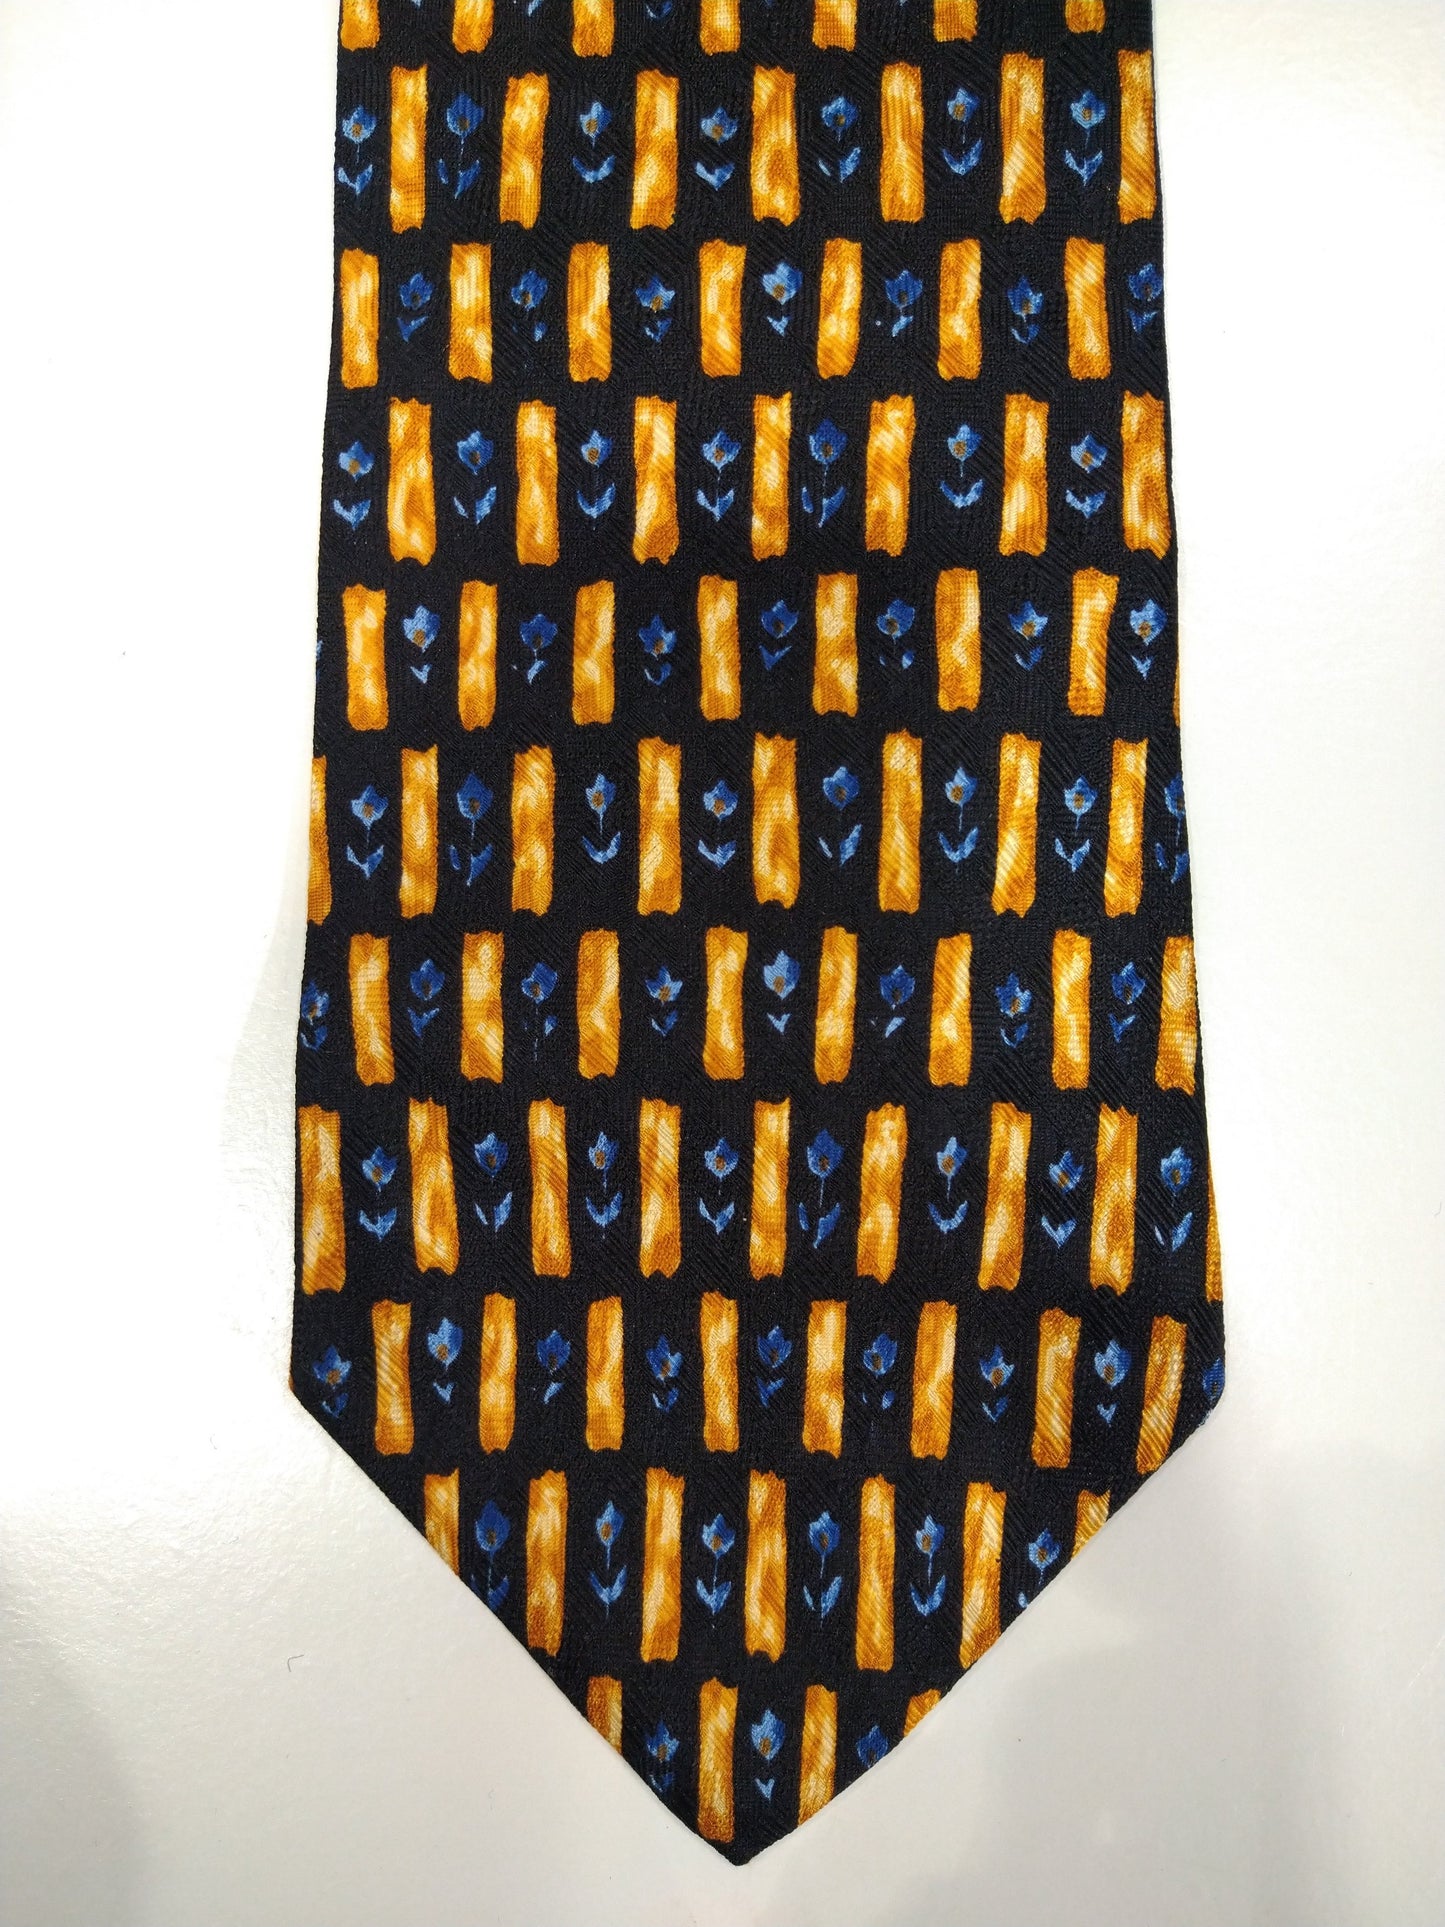 Cravatta vintage boss hugo boss. Motivo blu / nero / giallo.